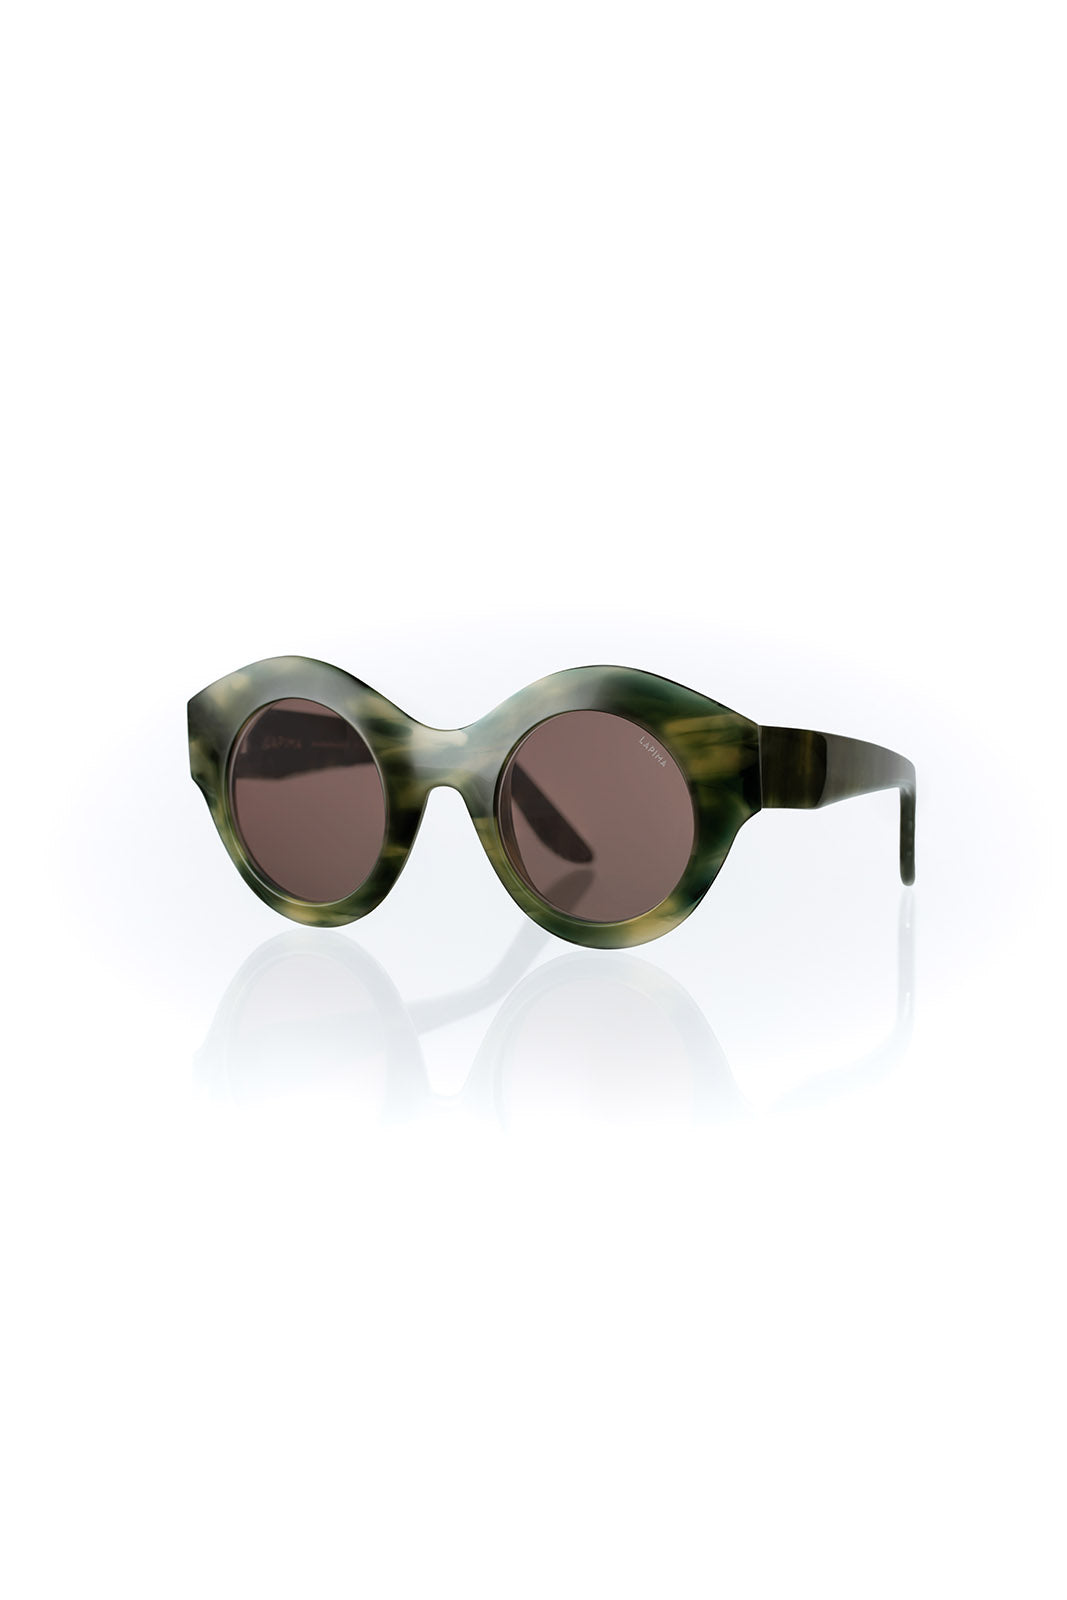 lapima-vera-forest-sunglasses-amarees